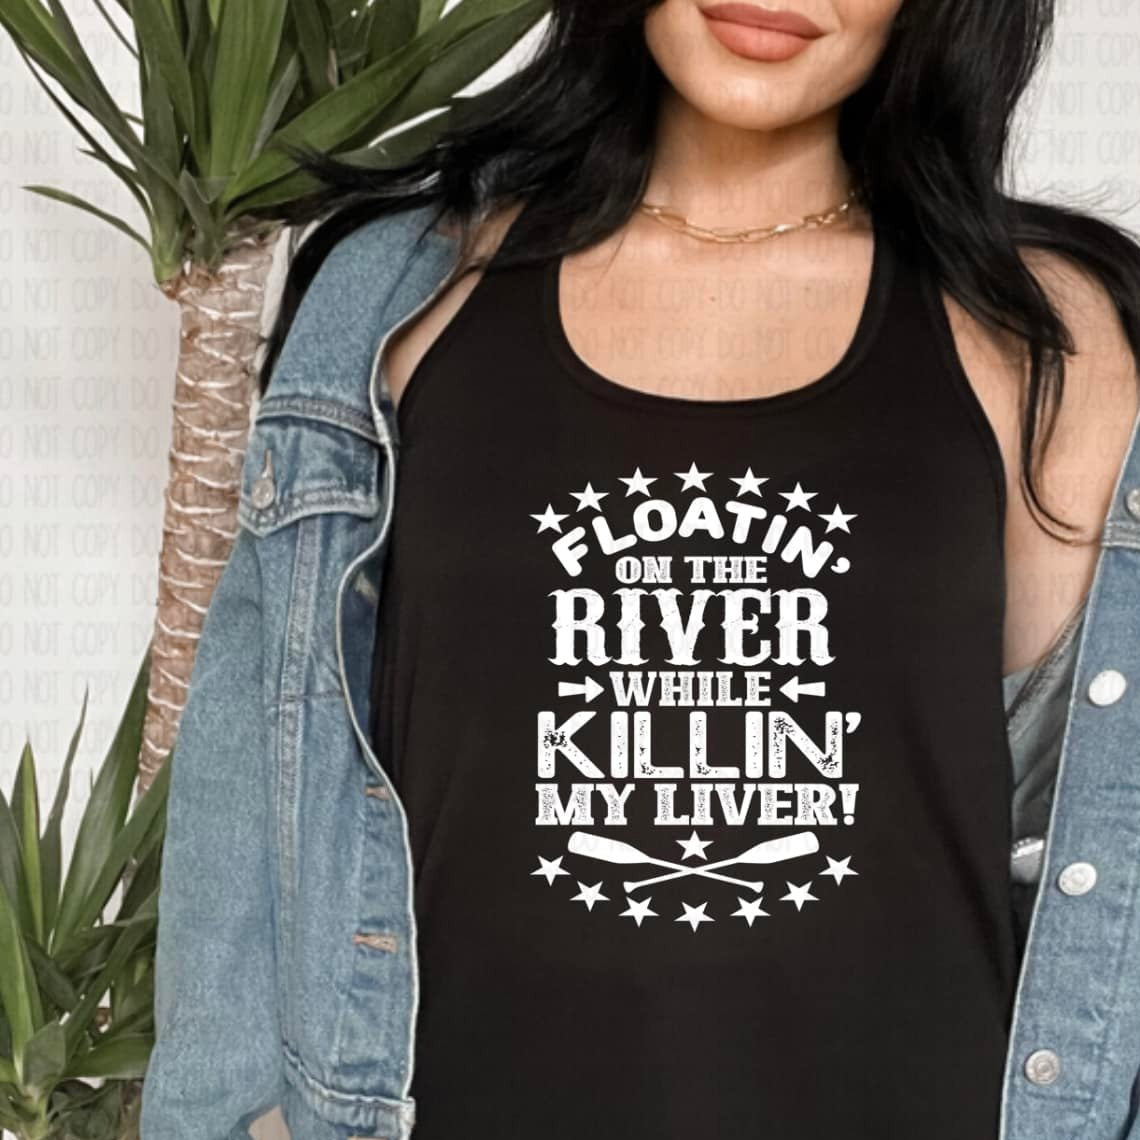 Floatin' on the River, Killin' my Liver